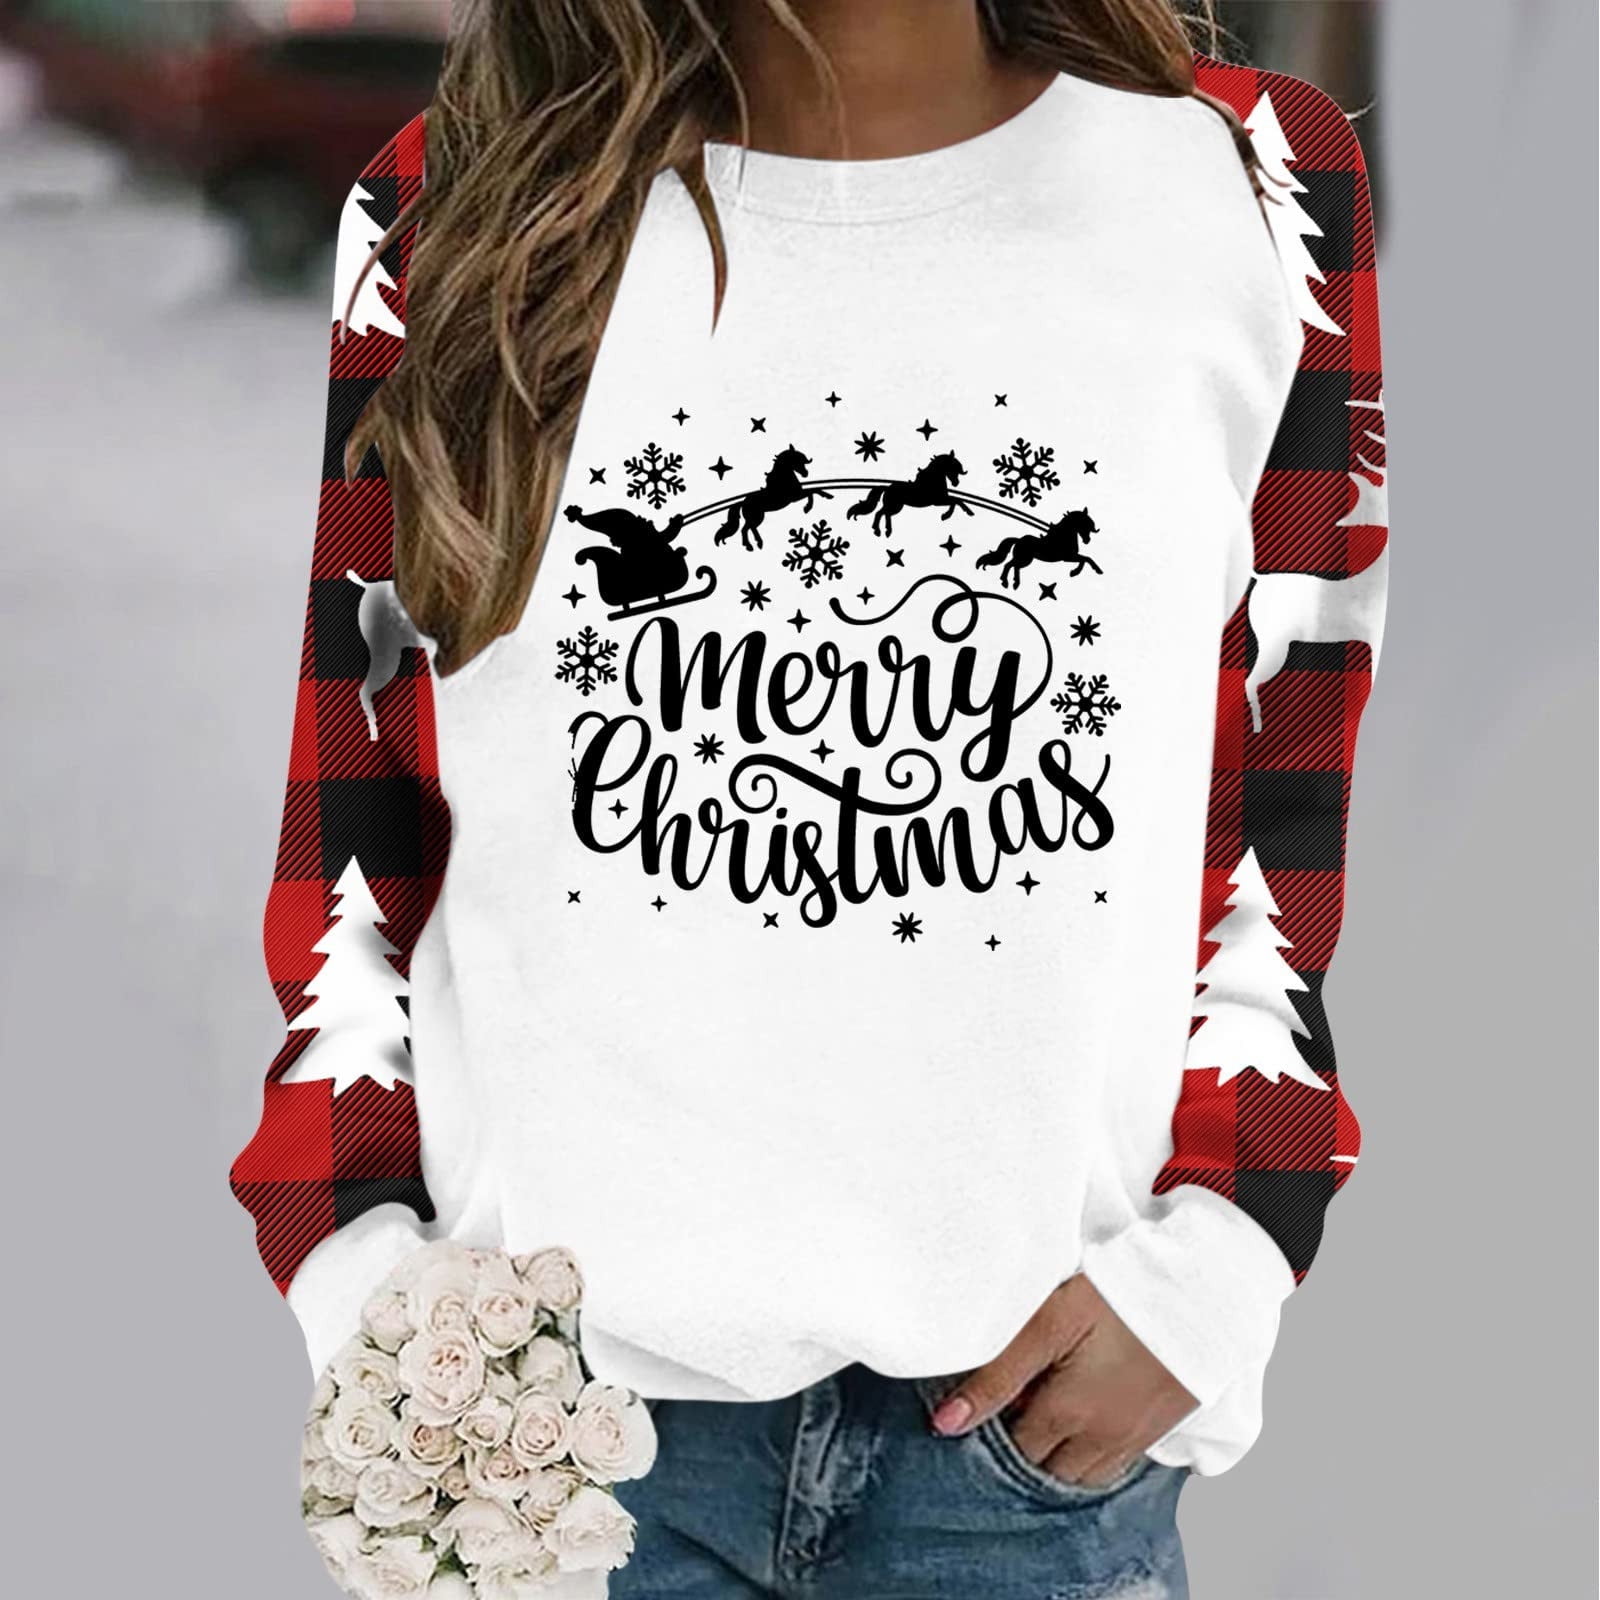 Sweatshirt for Women Crewneck Christmas Shirts Fashion Print Graphic Sweatshirt Merry Christmas Casual Pullover Tops 